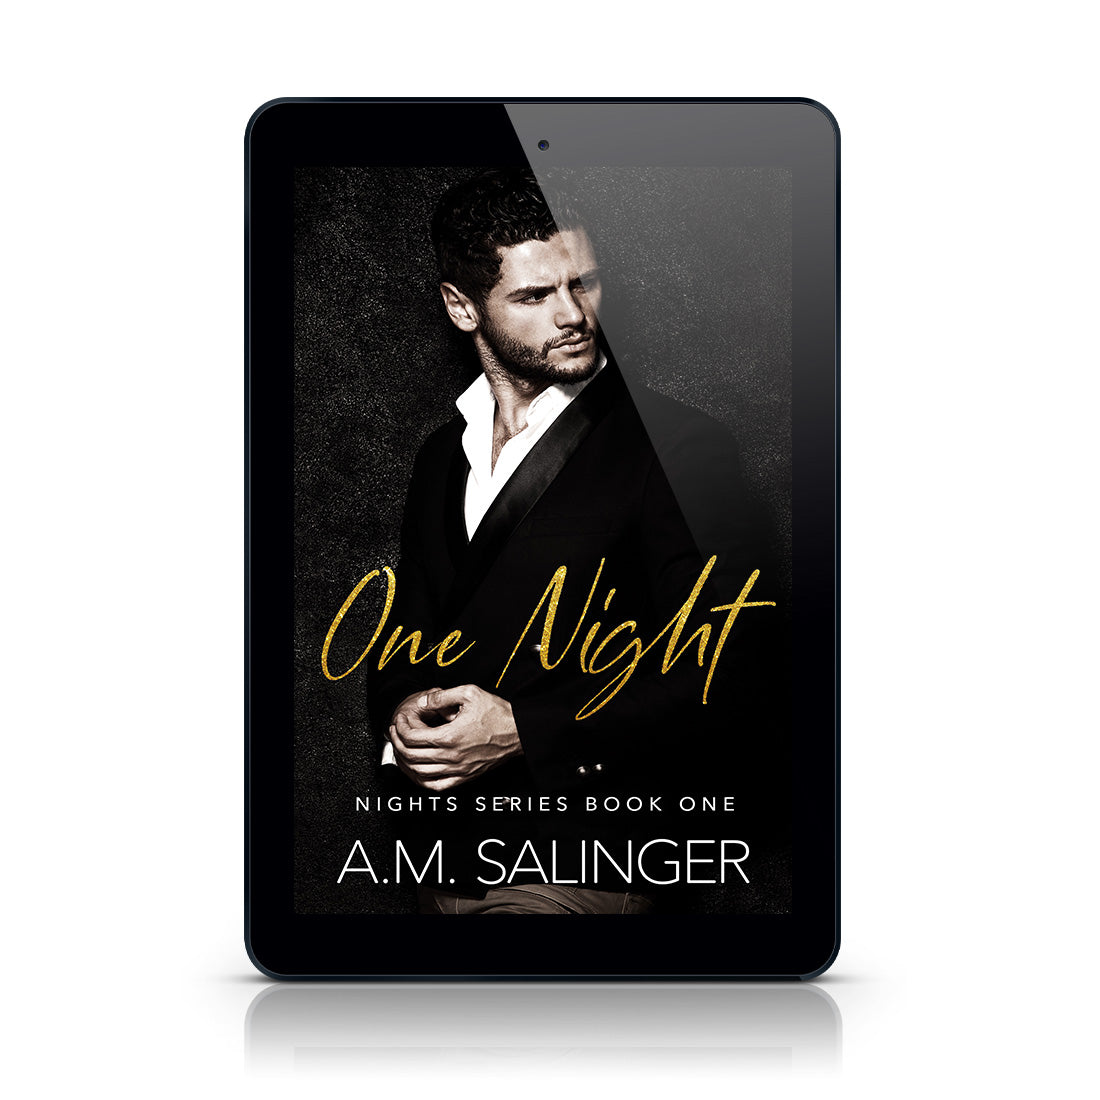 One Night (Nights Series 1) EBOOK contemporary mm romance author am salinger